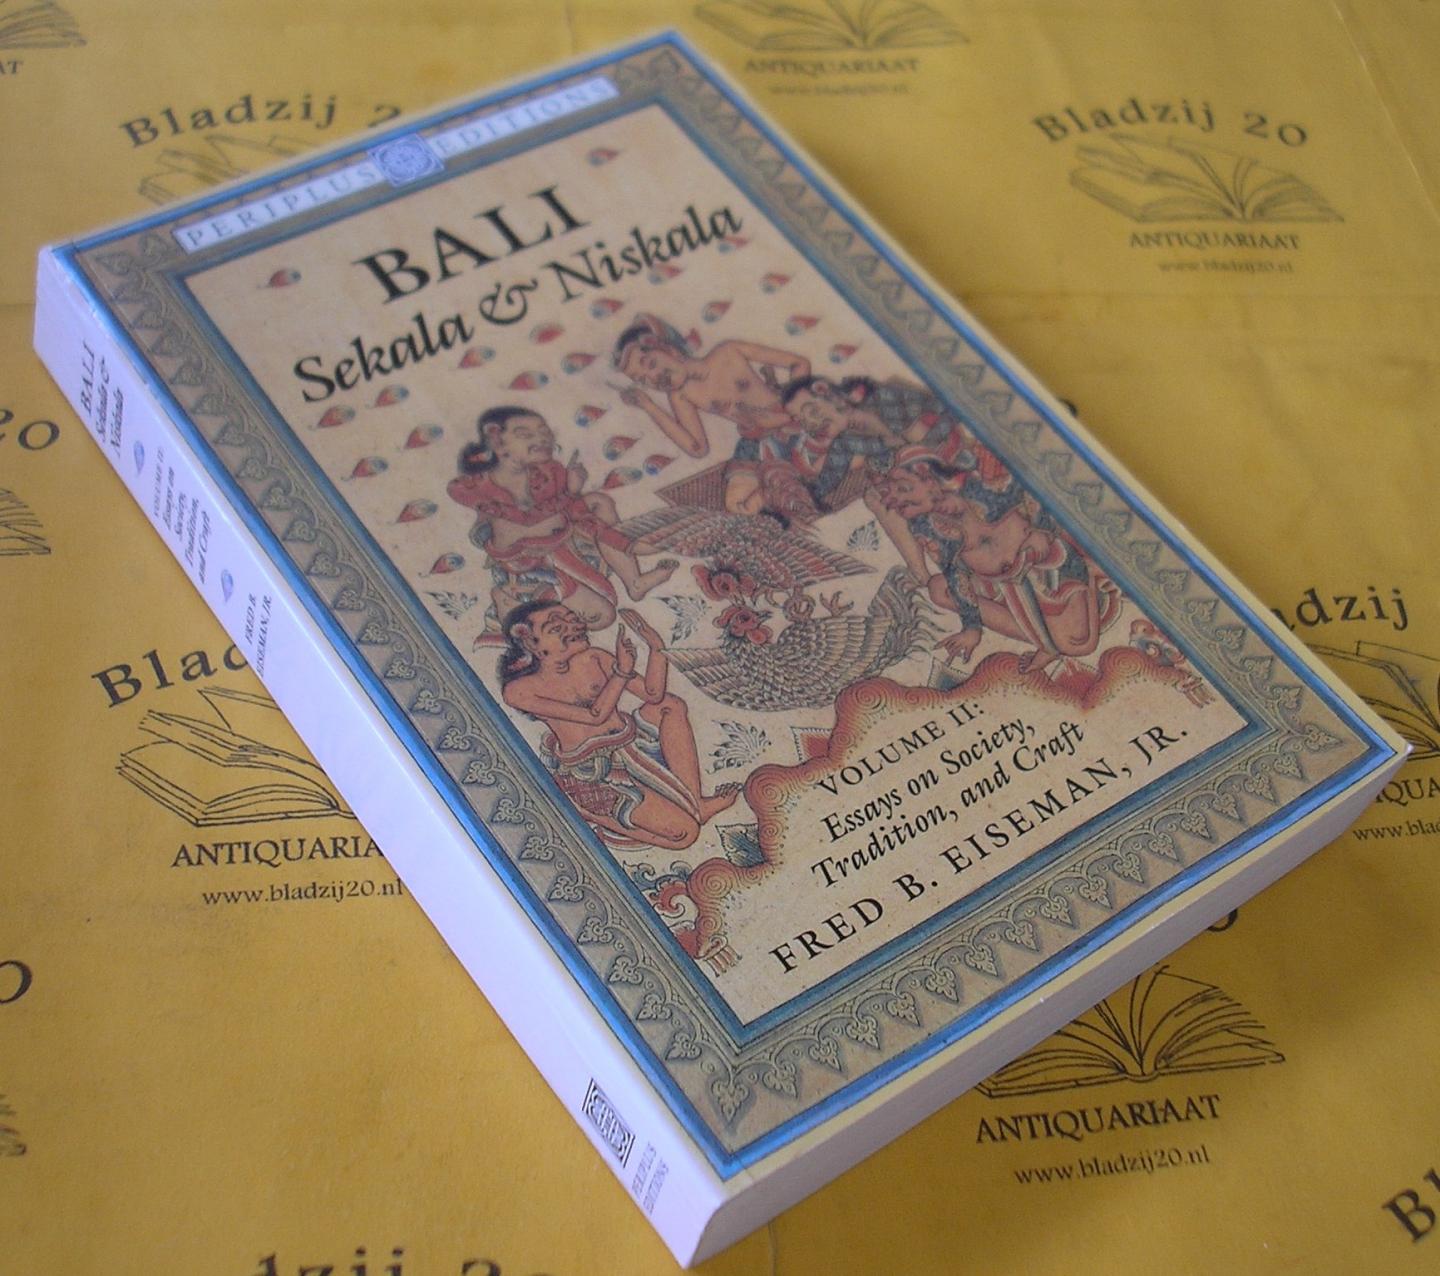 Eiseman, Fred B. - Bali: Sekala and Niskala. Volume II: essays on society, tradition and craft.